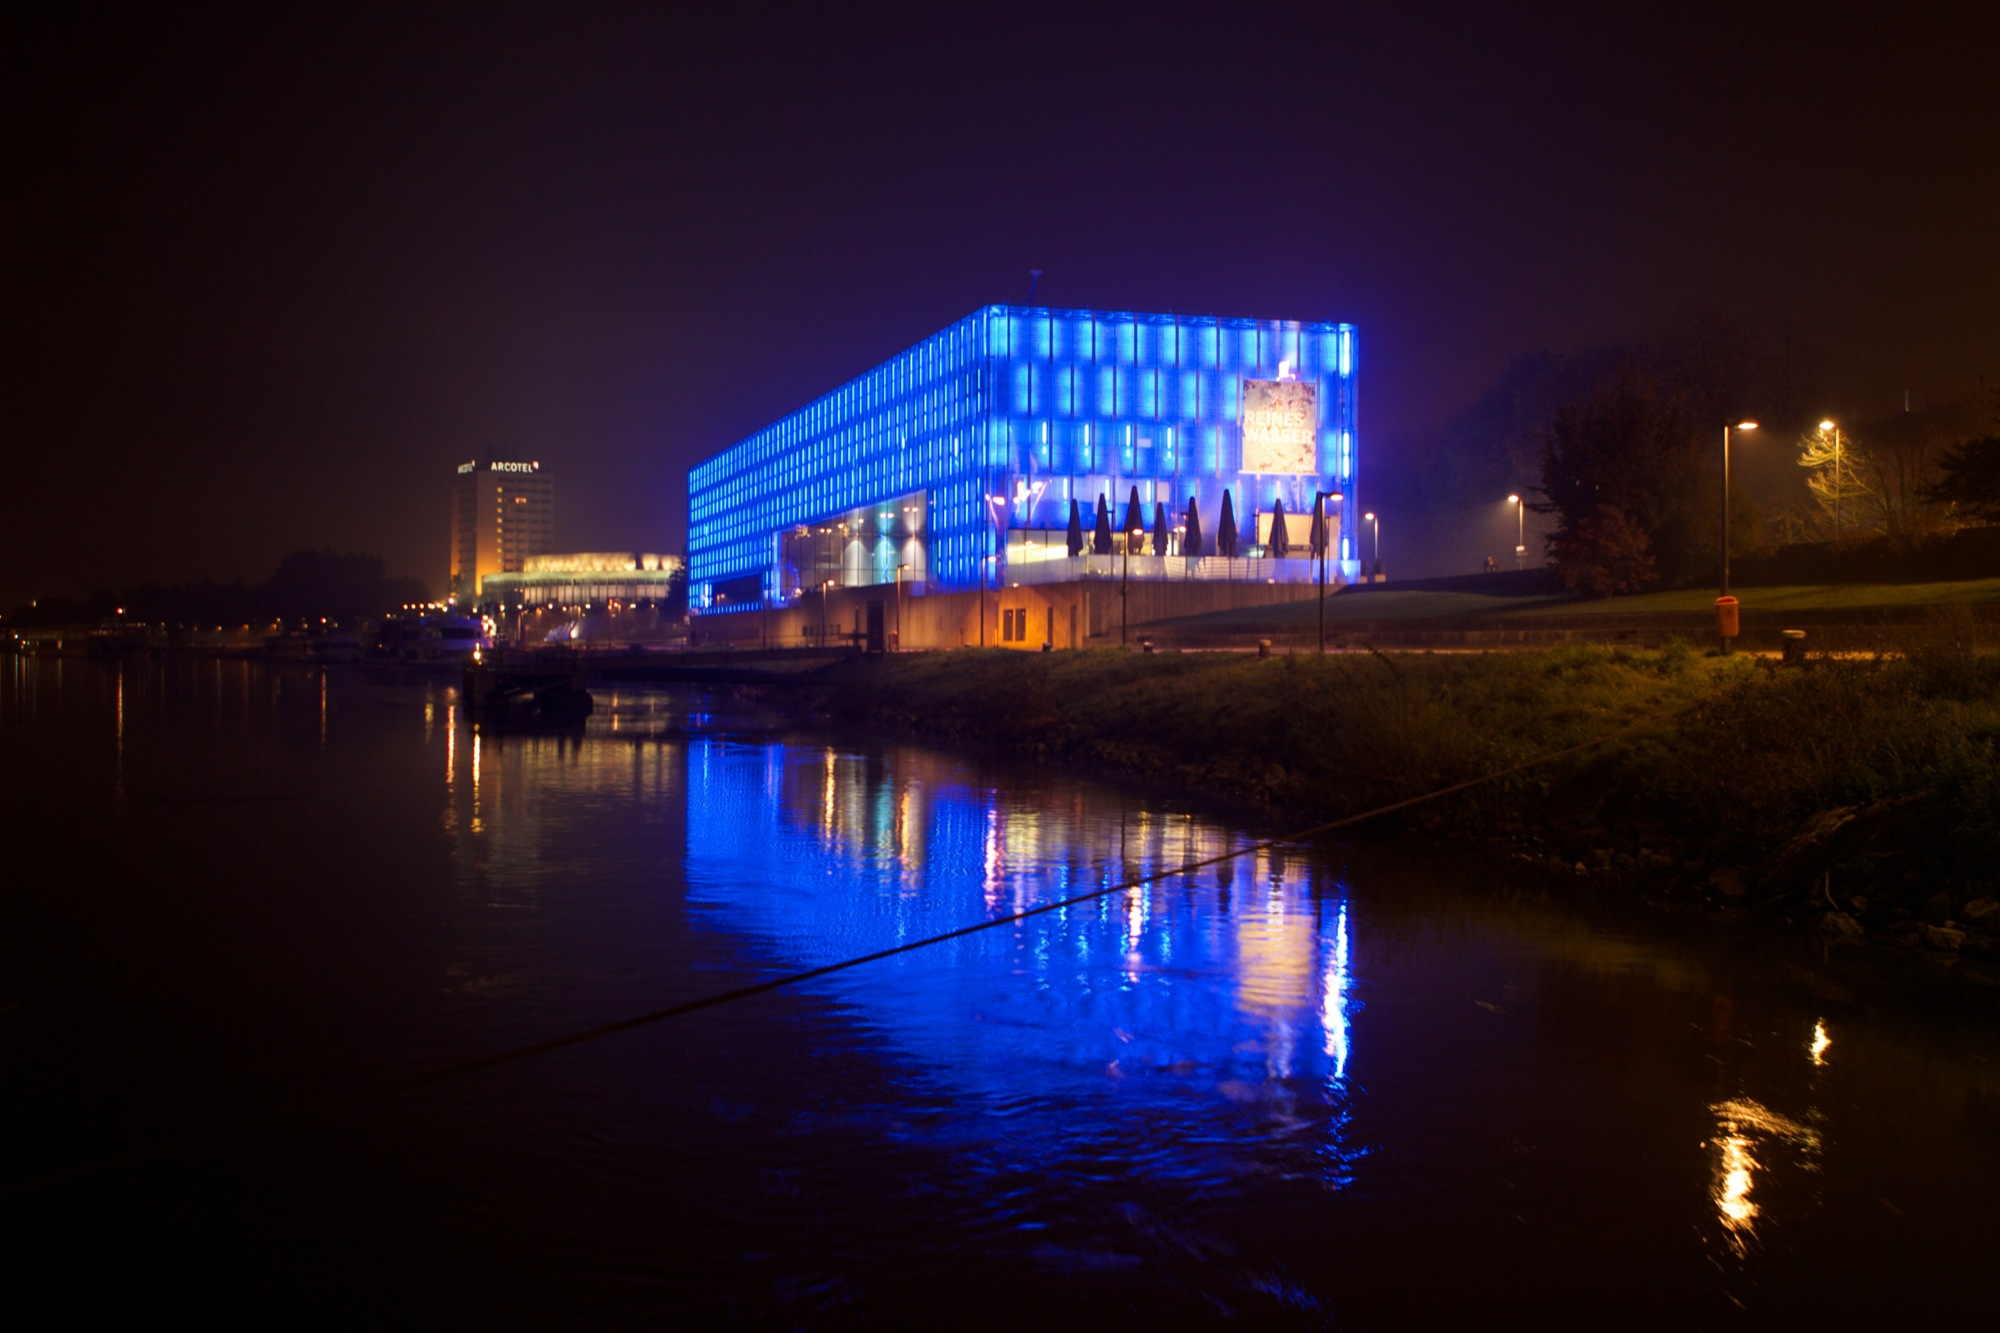 gegenüber dem Ars Electronica Center erstrahlt das Lentos Museum in blau